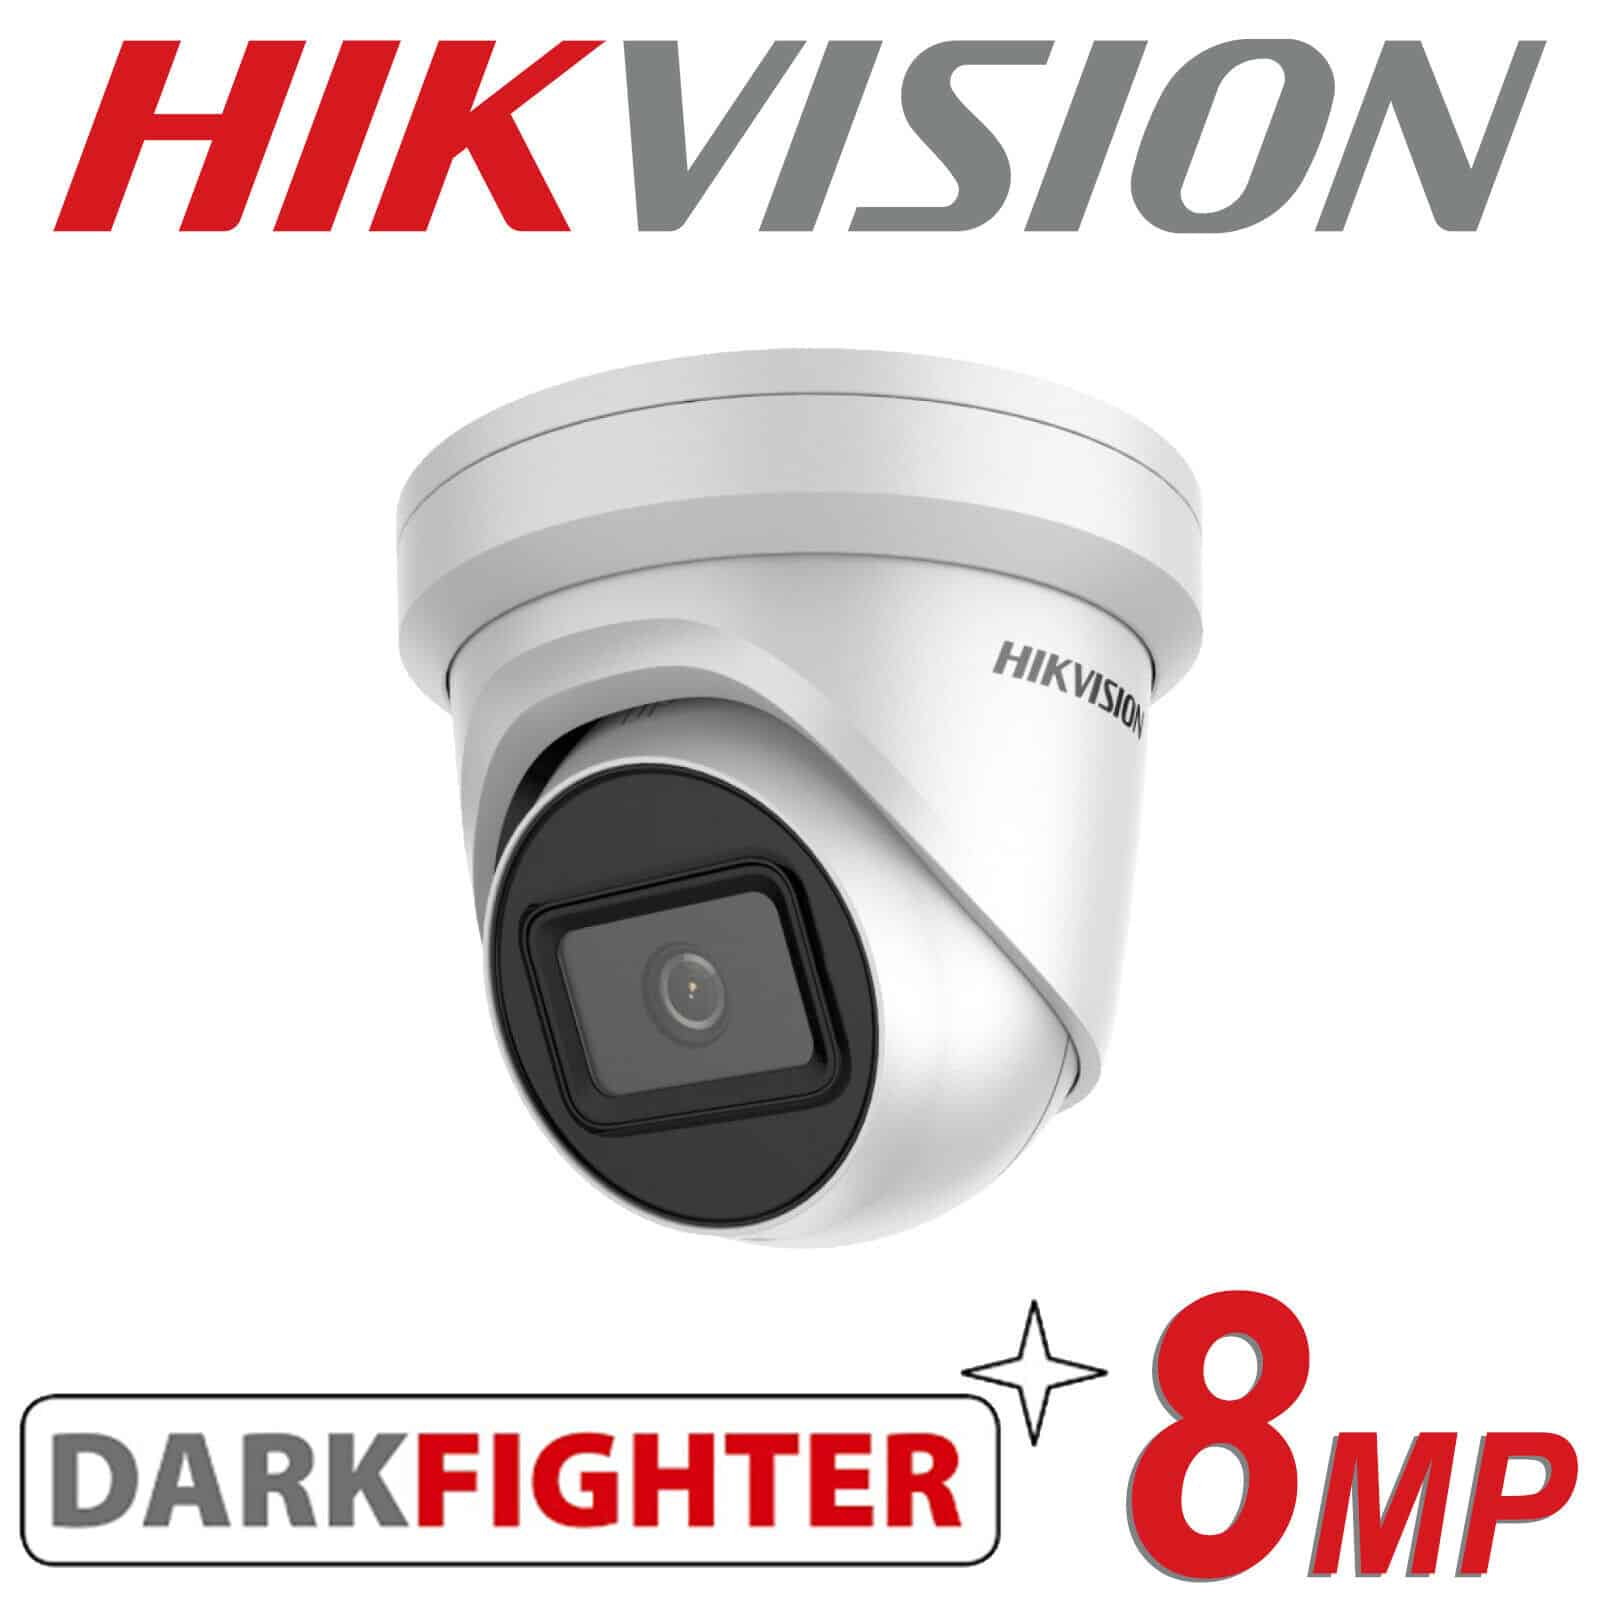 hikvision darkfighter 4k